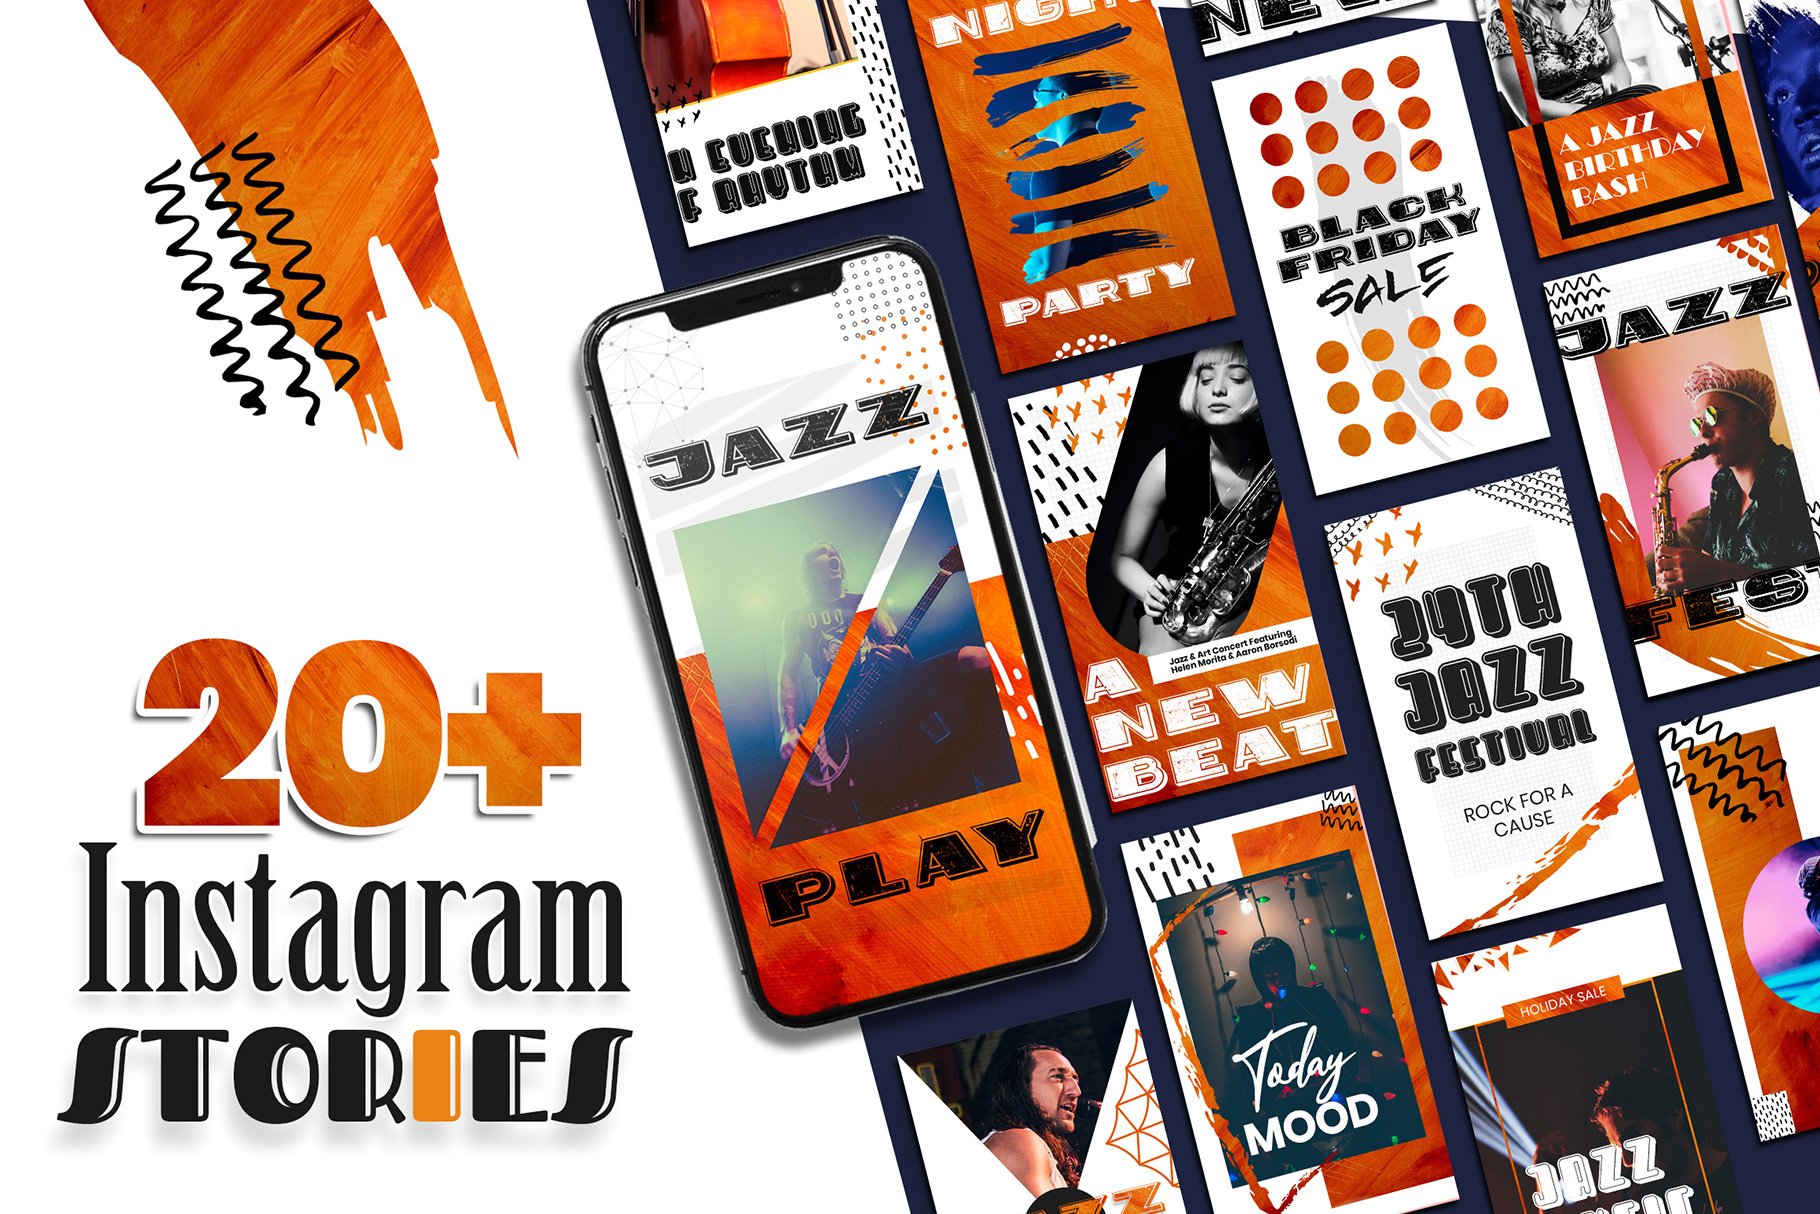 Jazz Music Festival InstagramStories cover image.